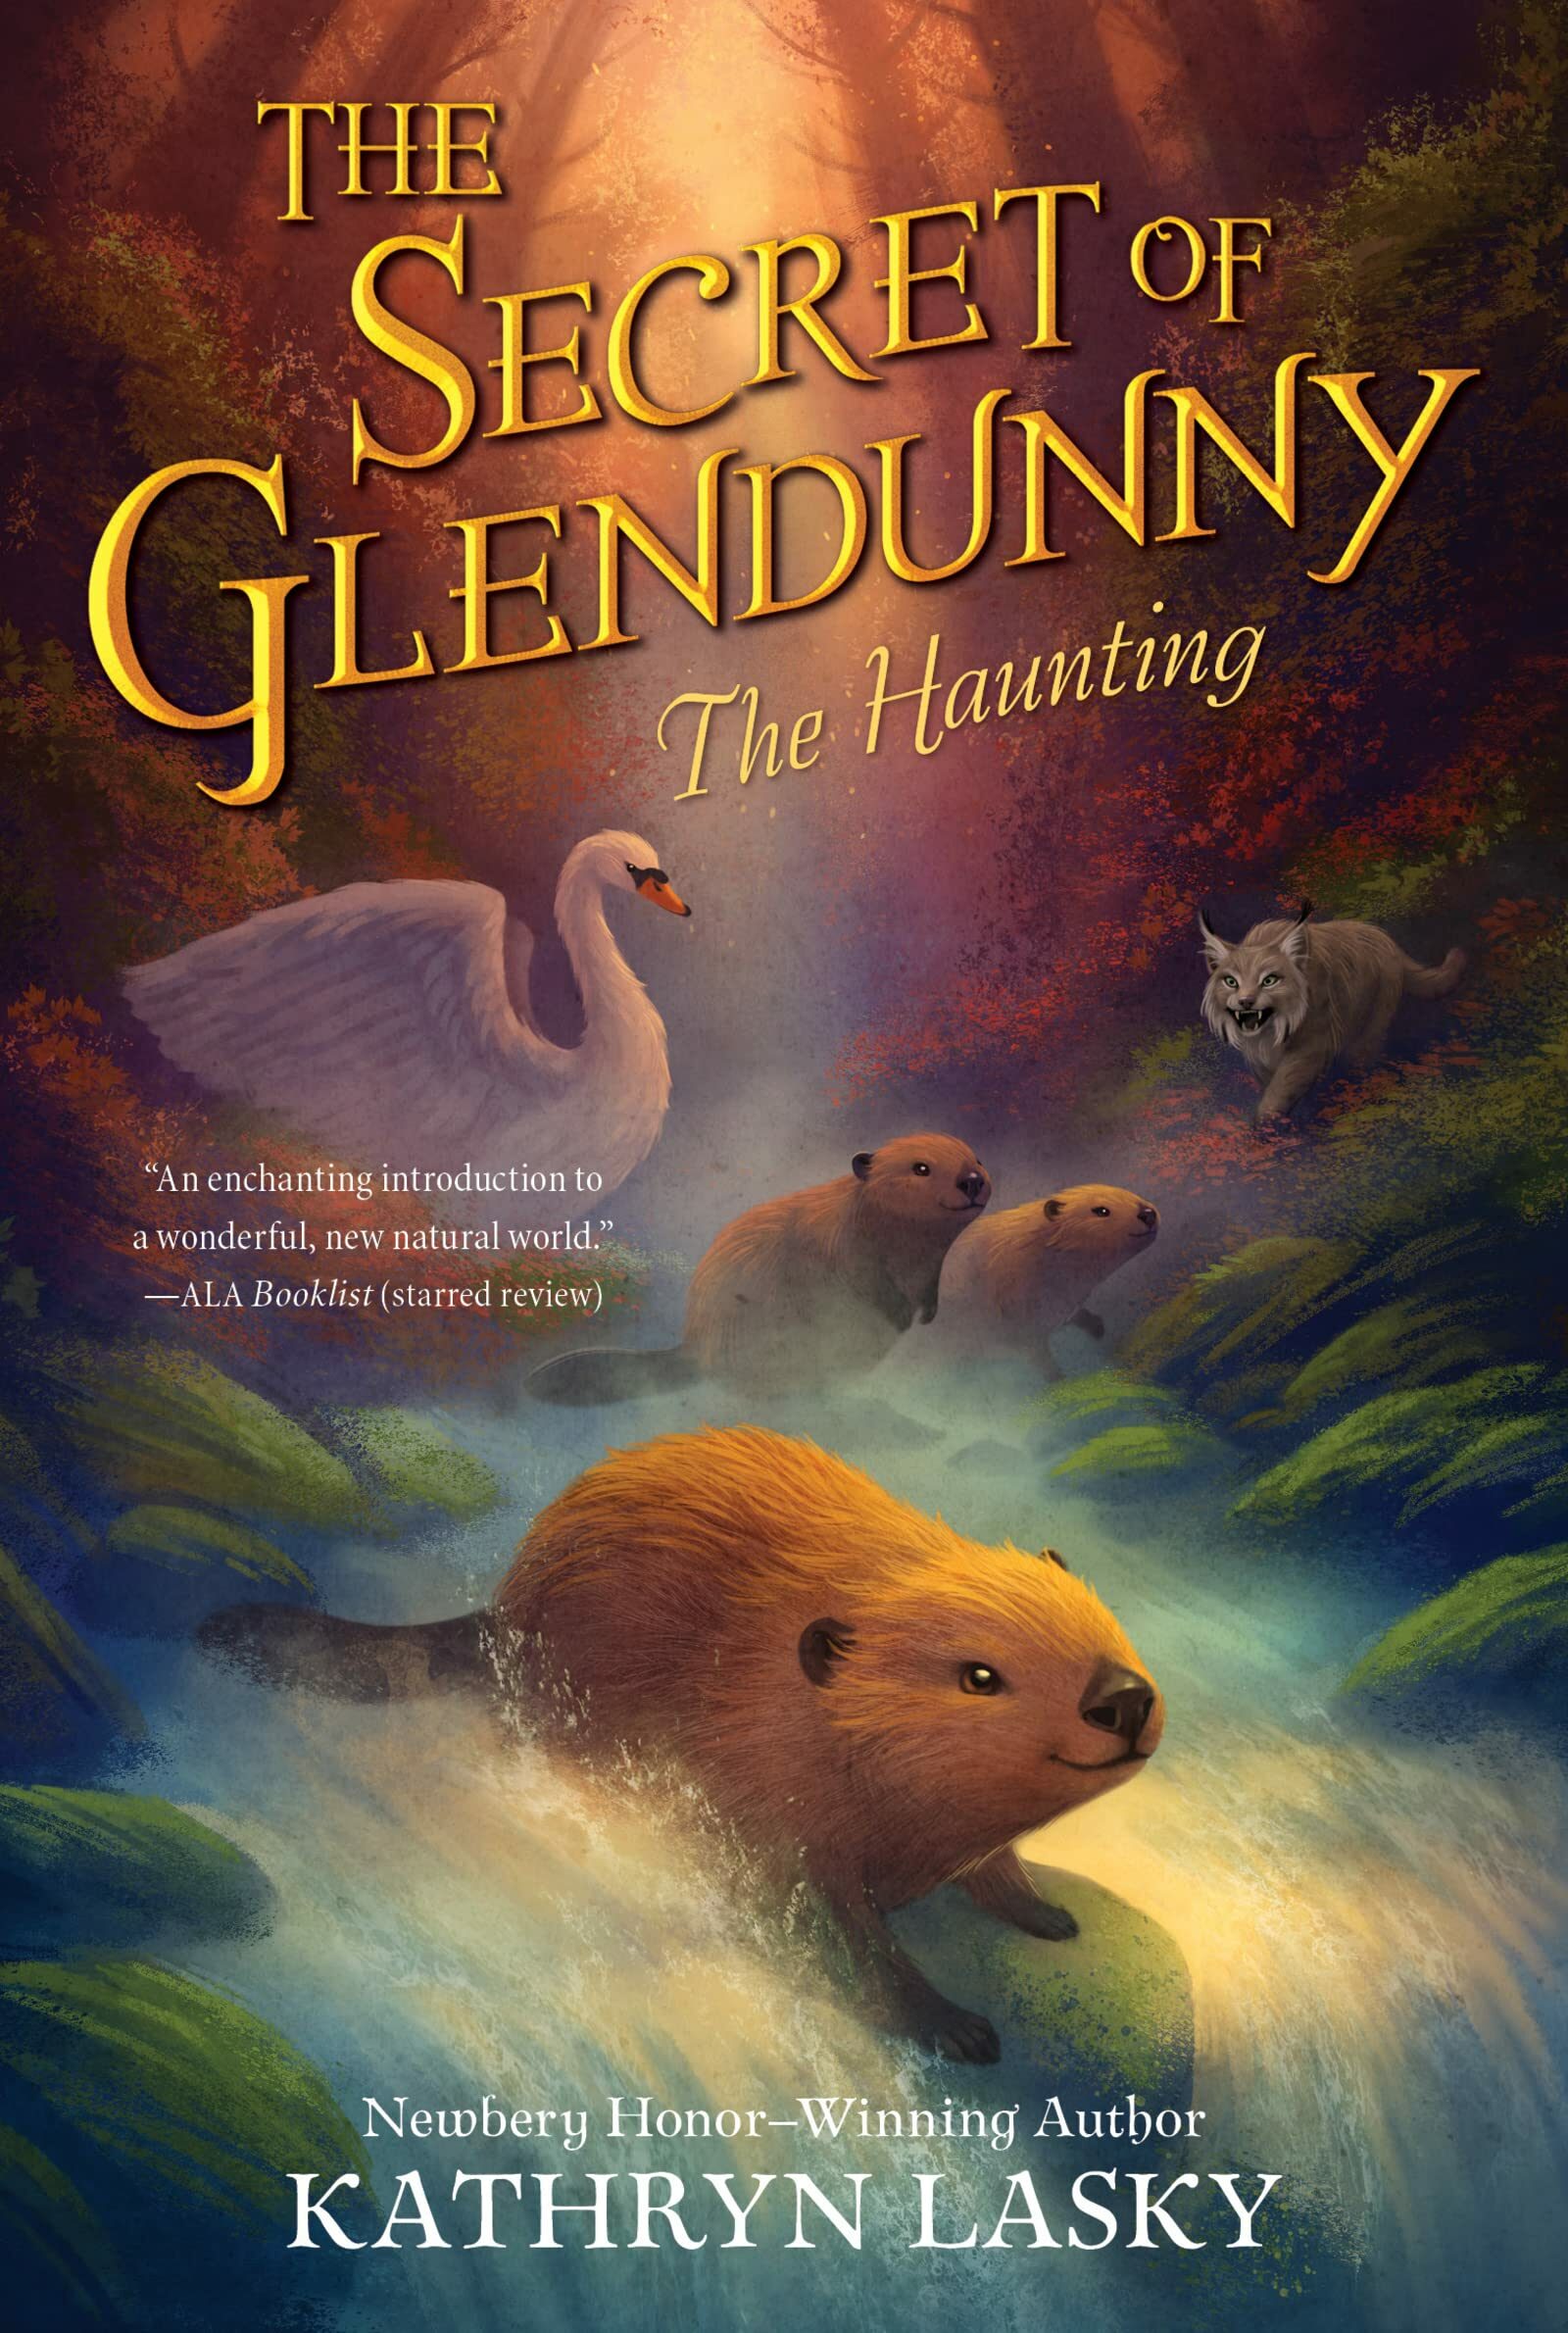 The Secret of Glendunny: The Haunting (The Secret of Glendunny #1)